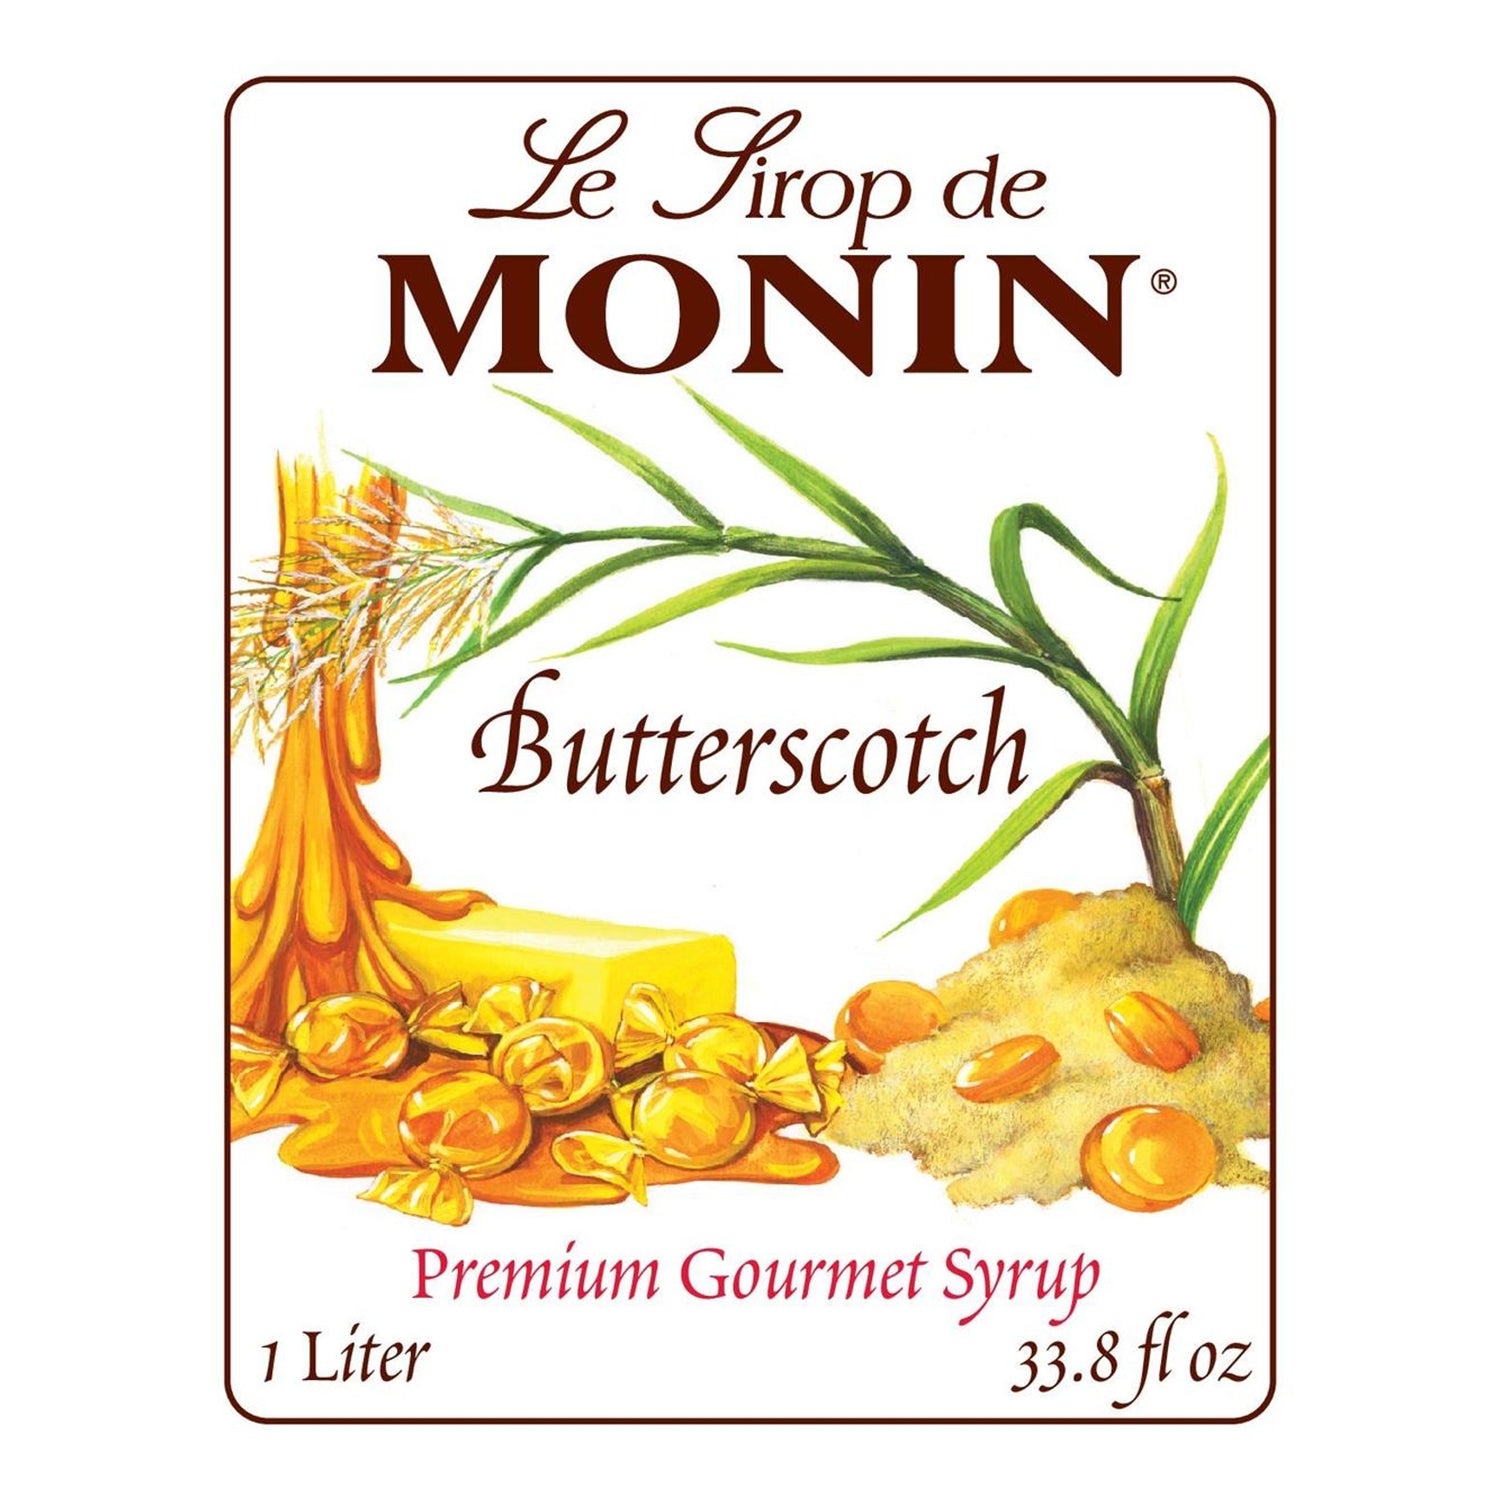 Monin Butterscotch Syrup brand label